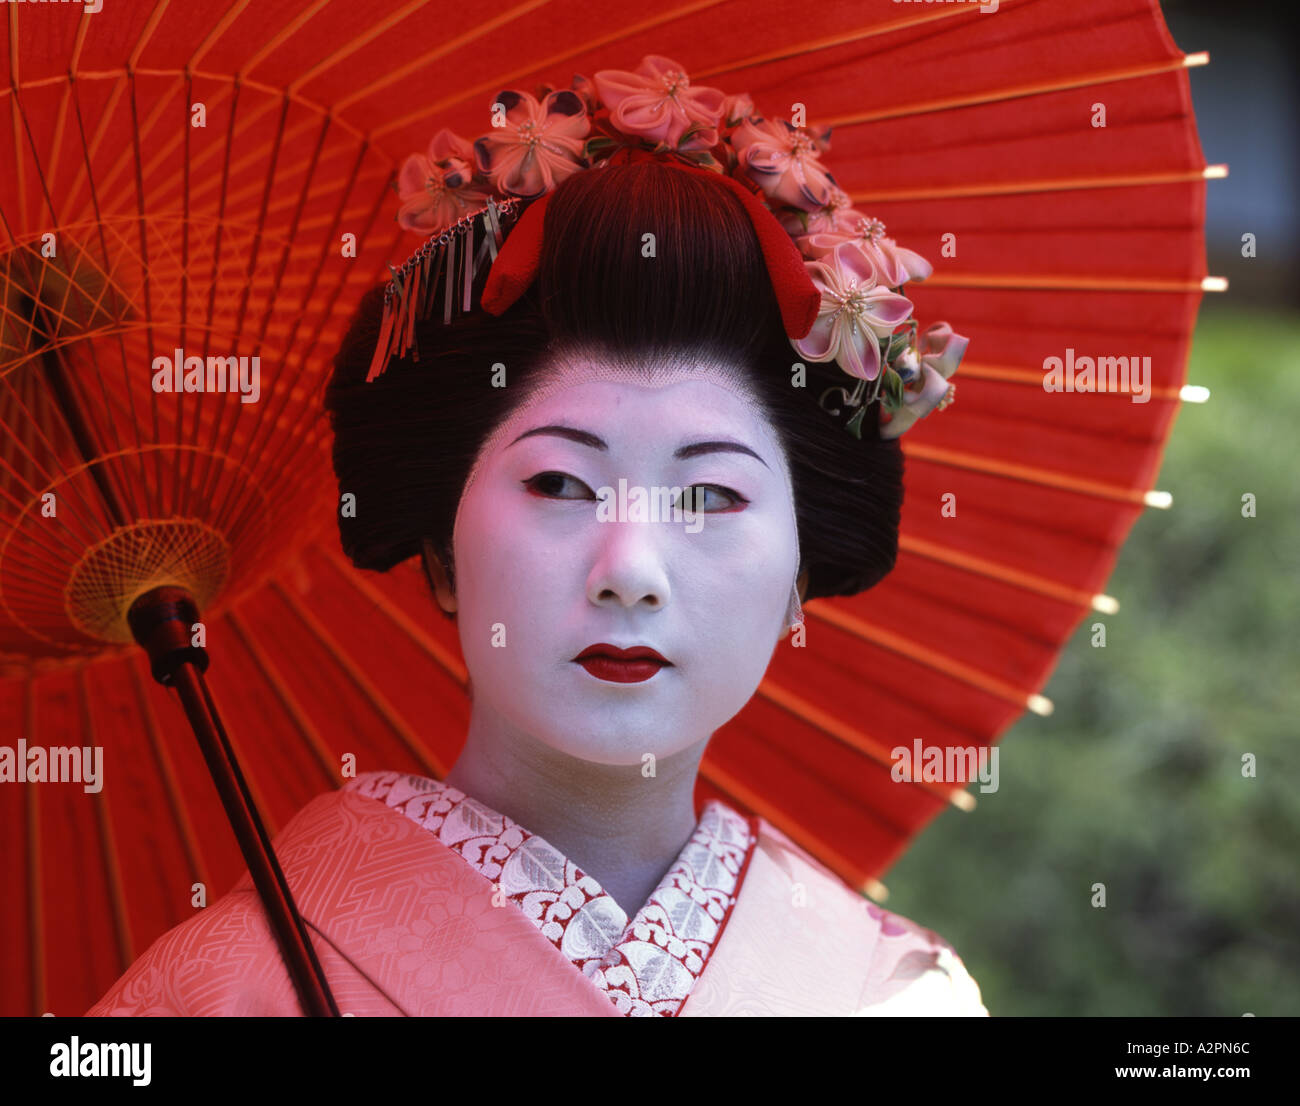 Niña maiko en aprendiz en traje de geisha en el jardín japonés de Kyoto  Gion vistiendo un kimono obi peluca sombrilla maquillaje pintalabios  Fotografía de stock - Alamy